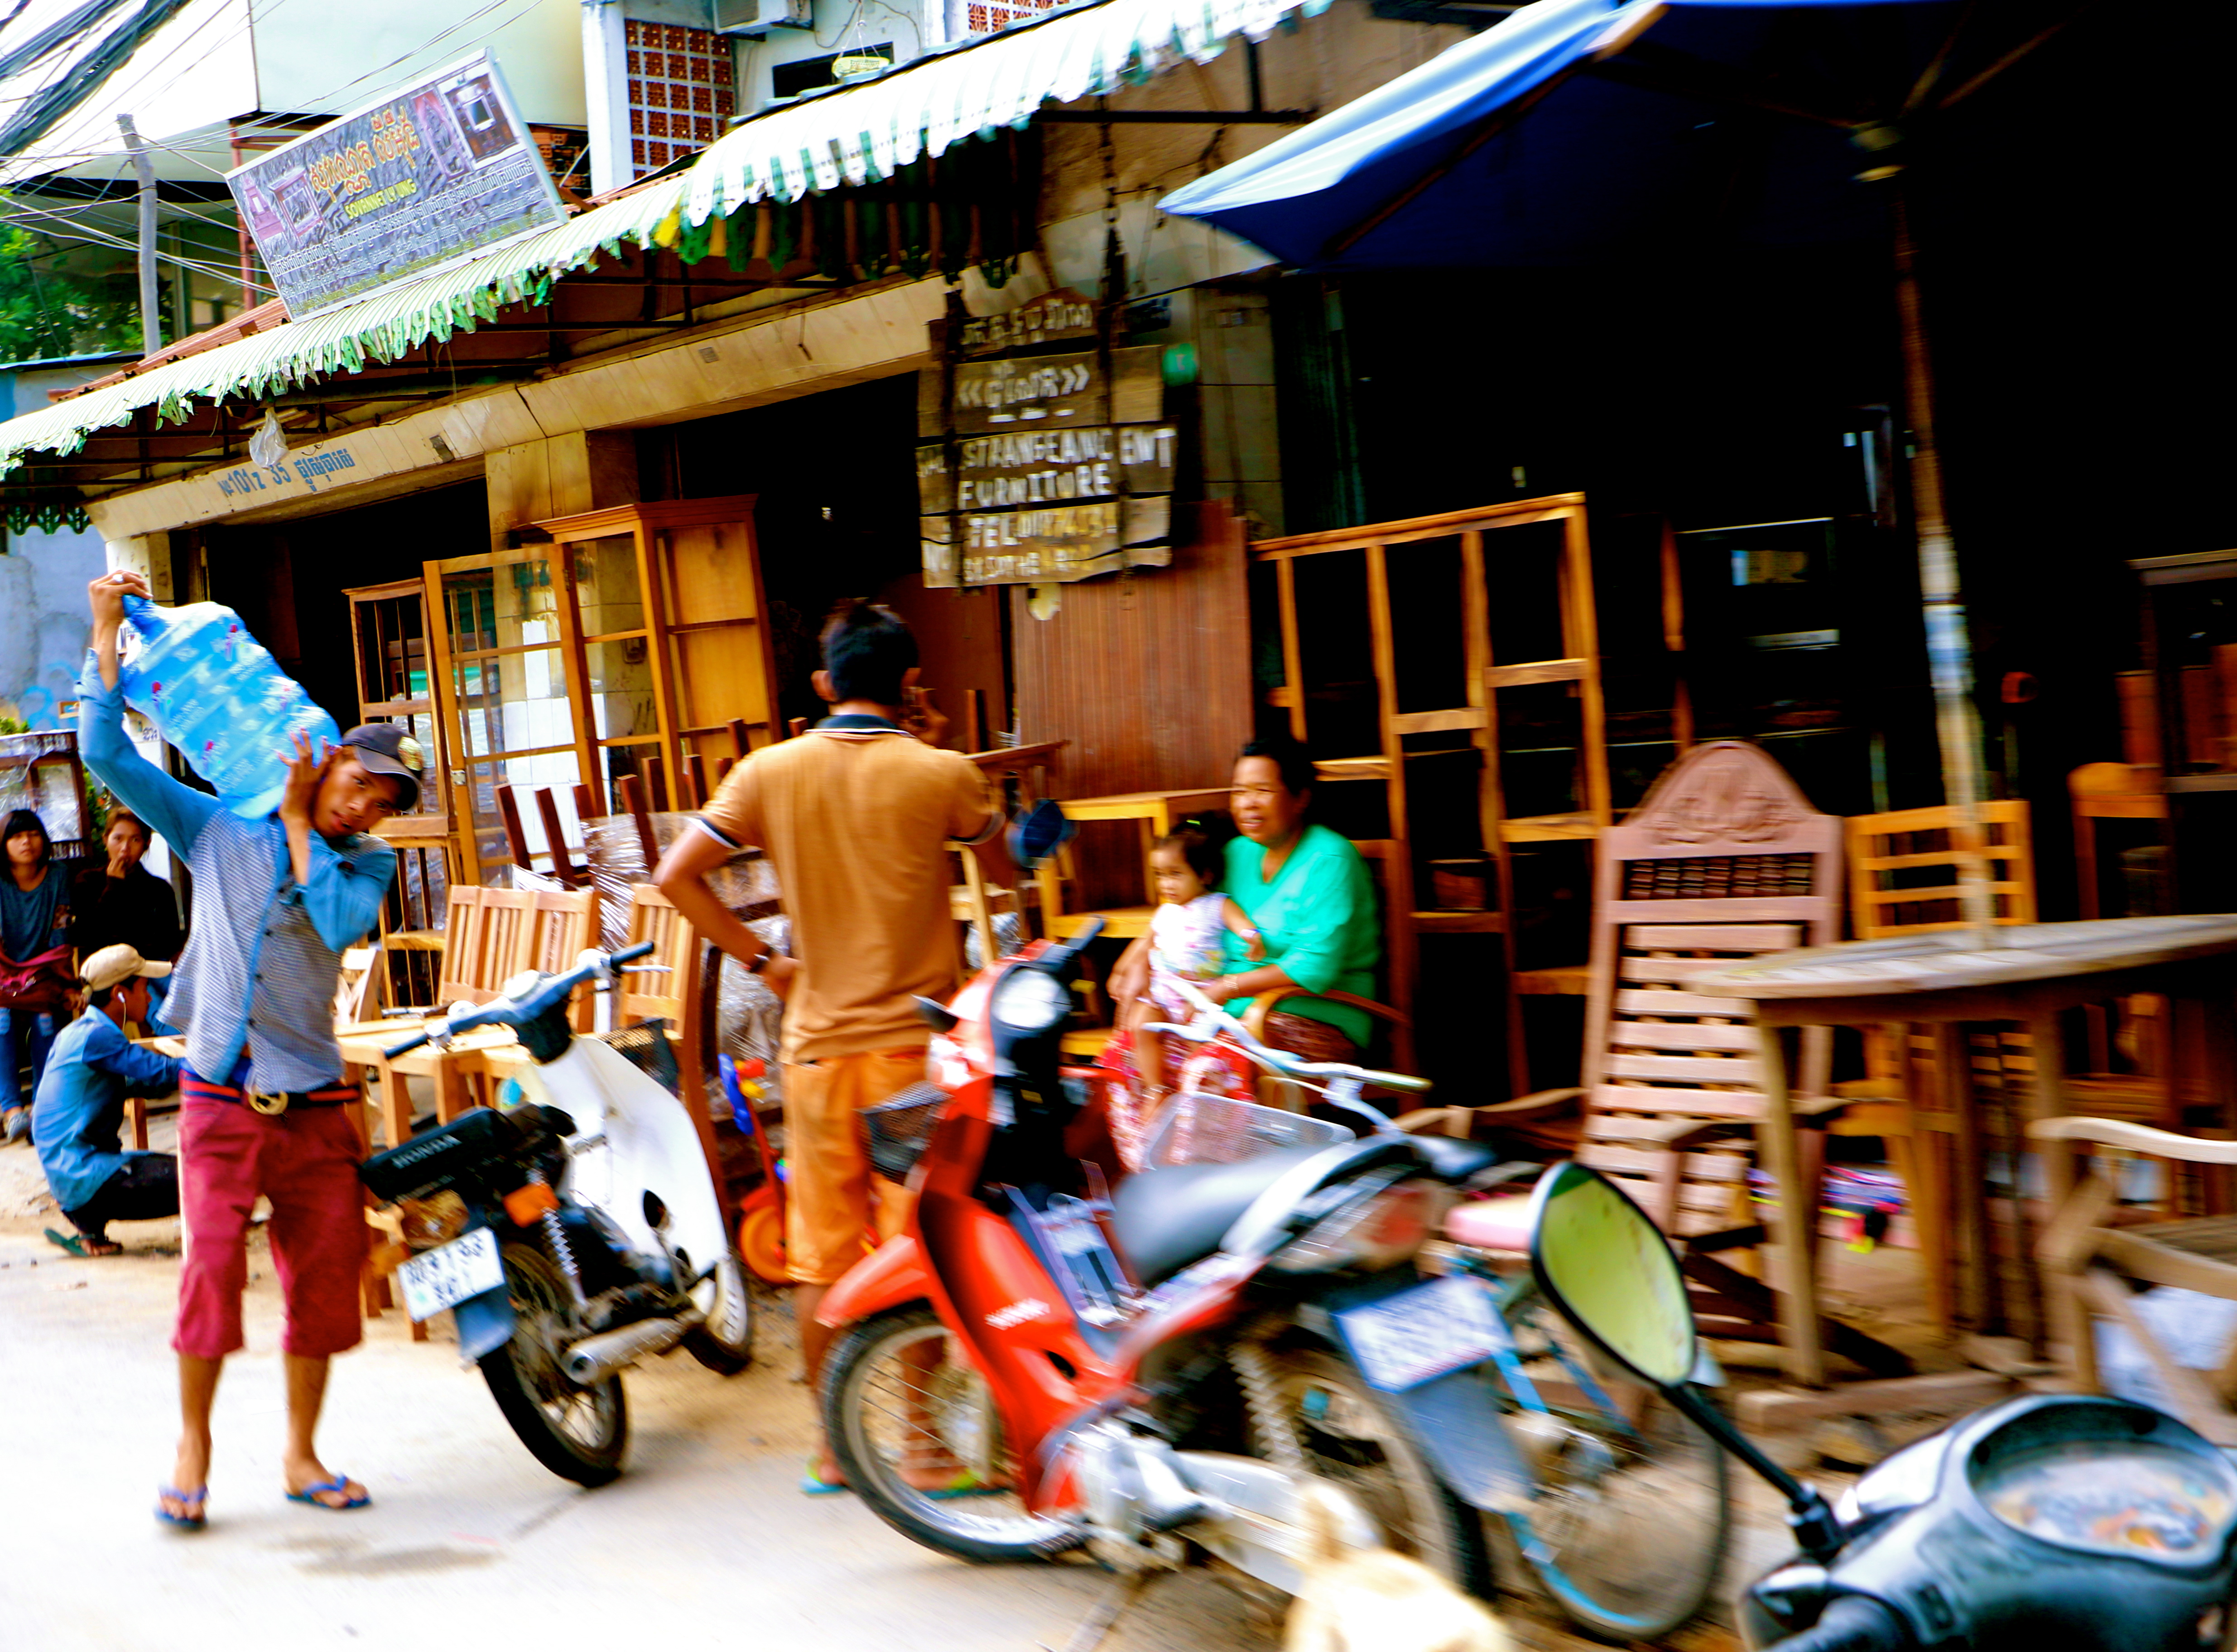 Sidewalks of Phnom Penh